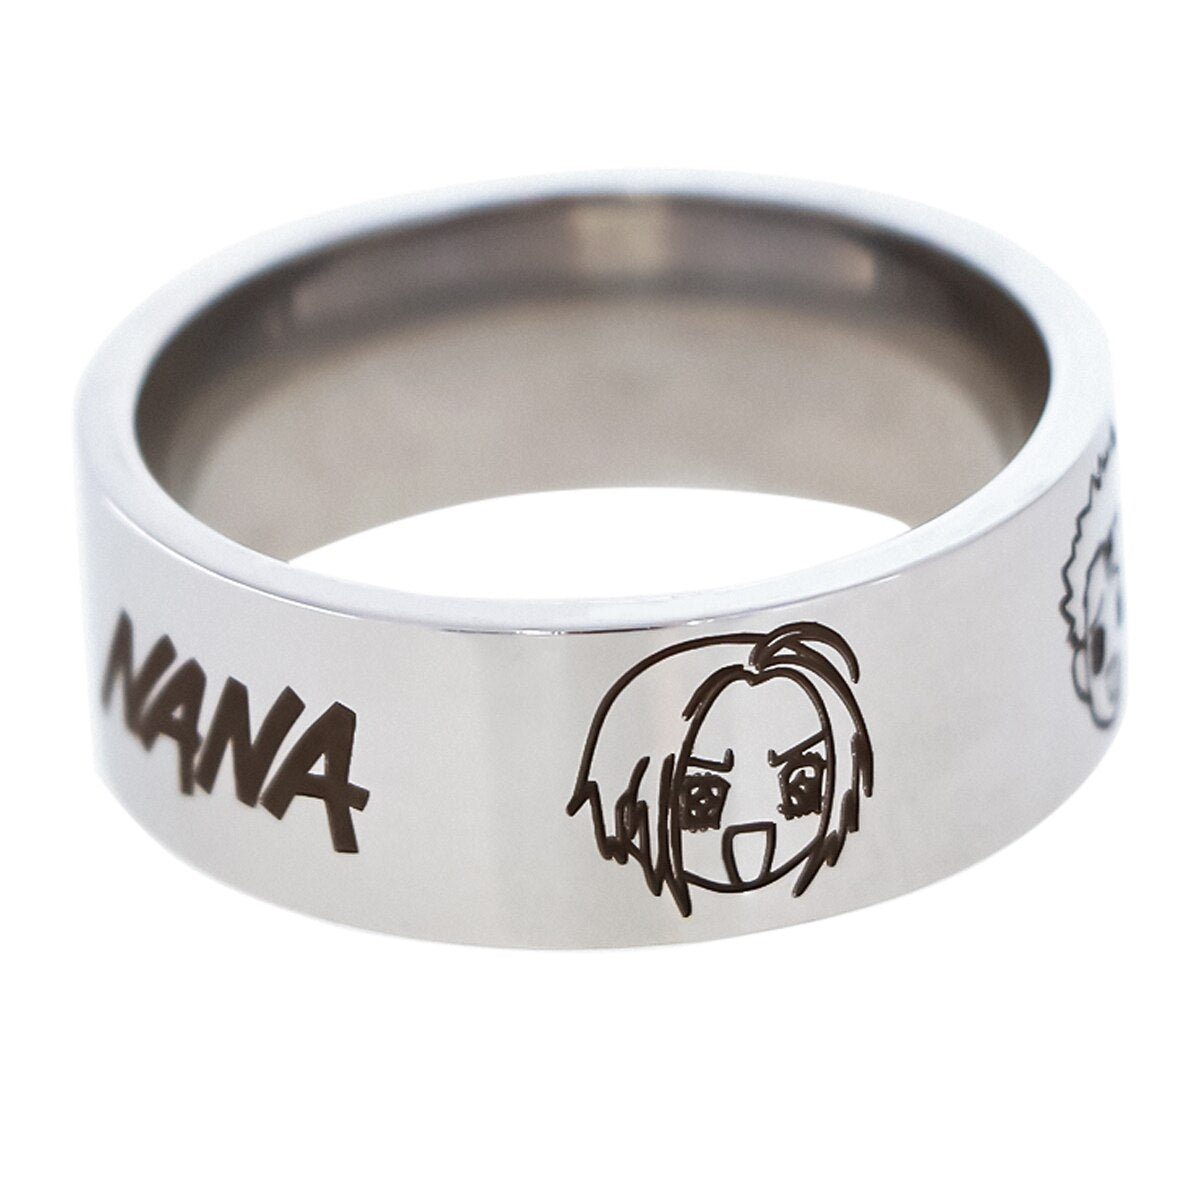 Anime inspired engagement ring designs | CustomMade.com